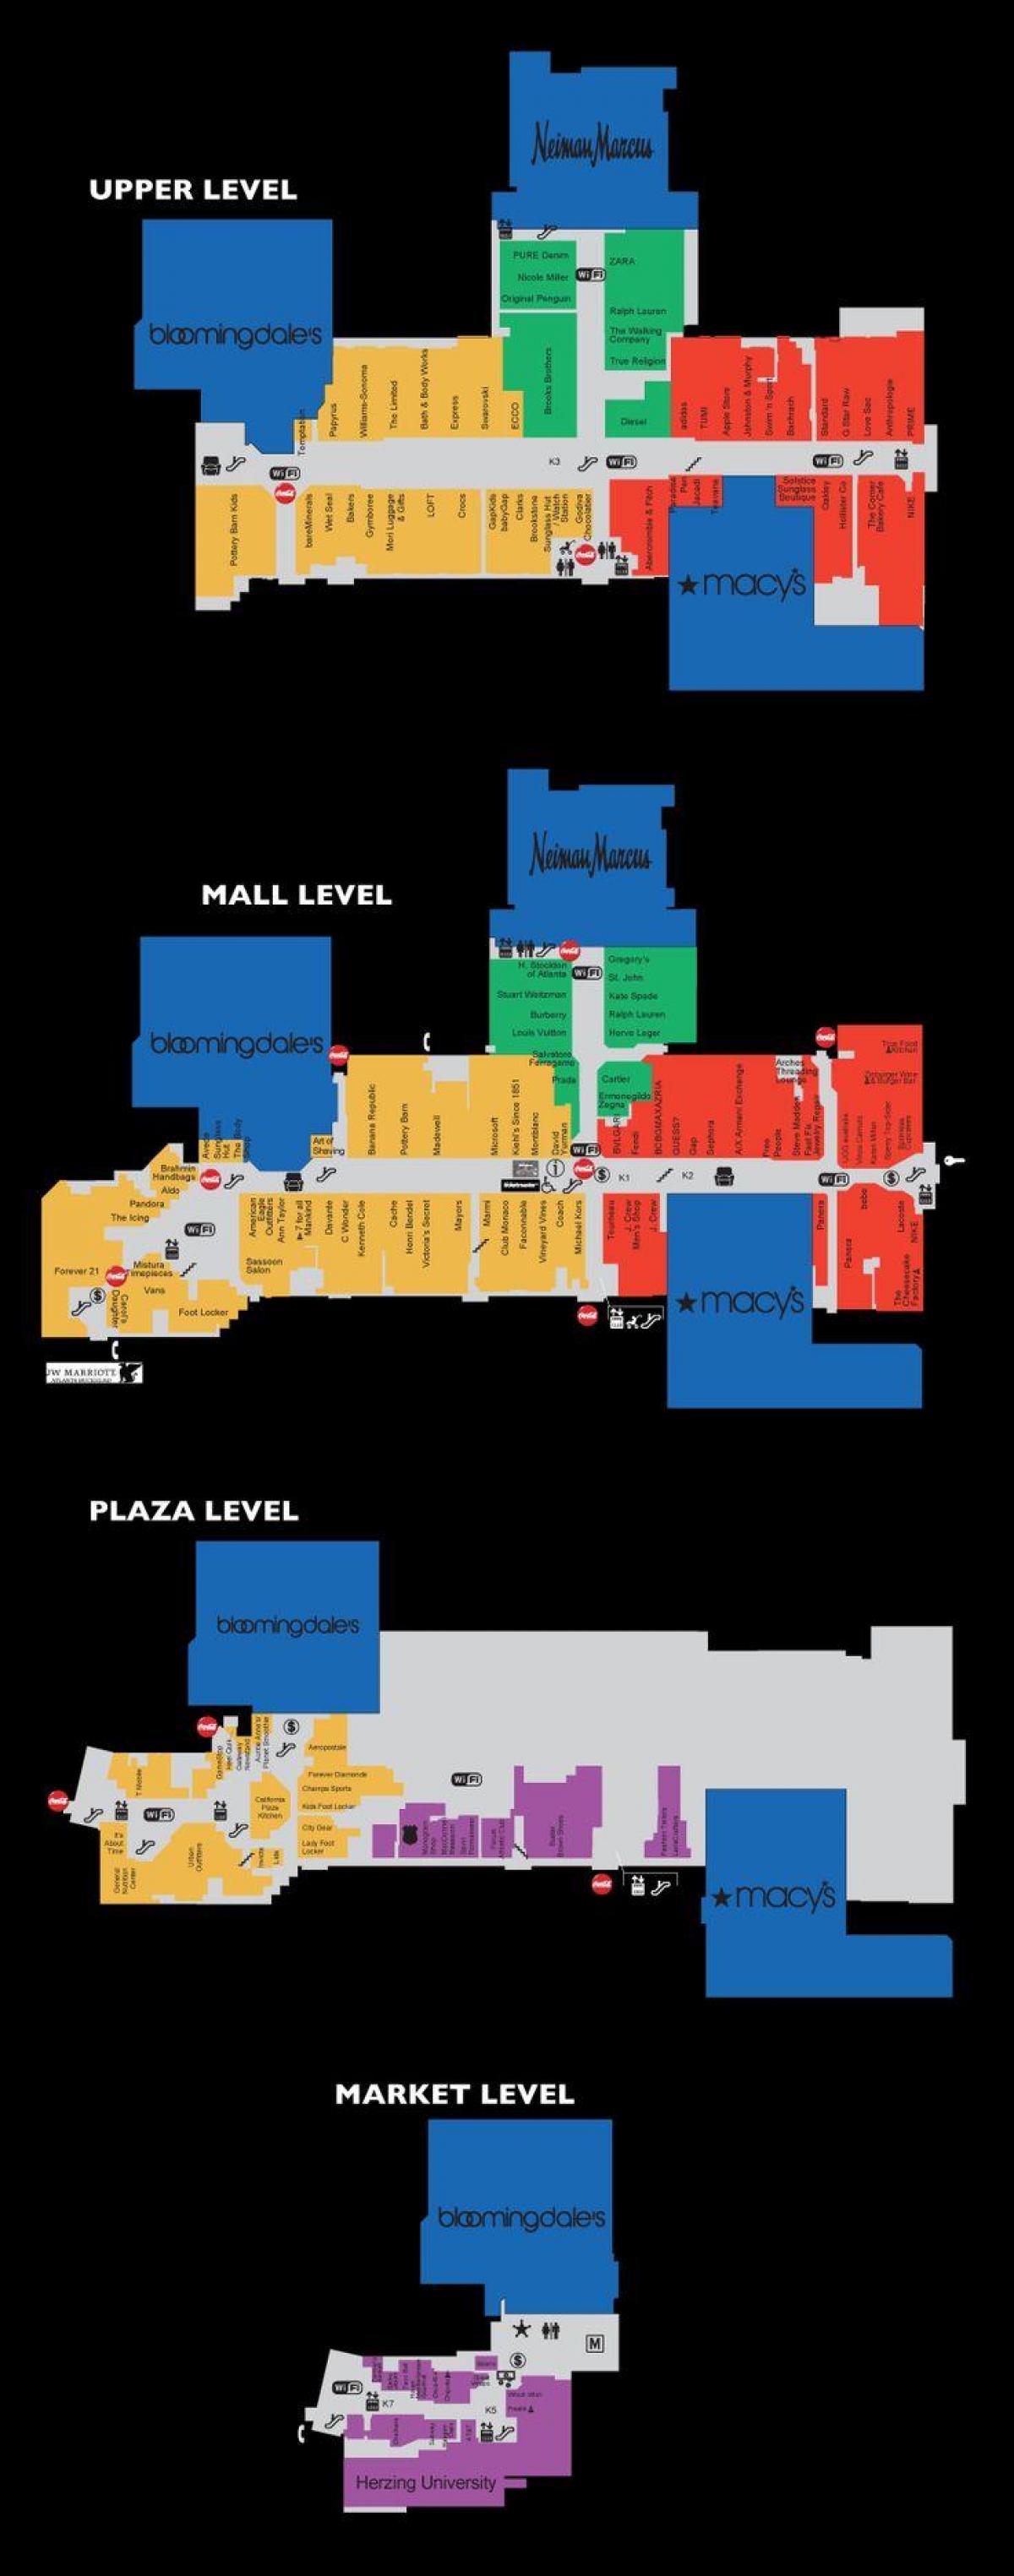 Lenox square Mall картата